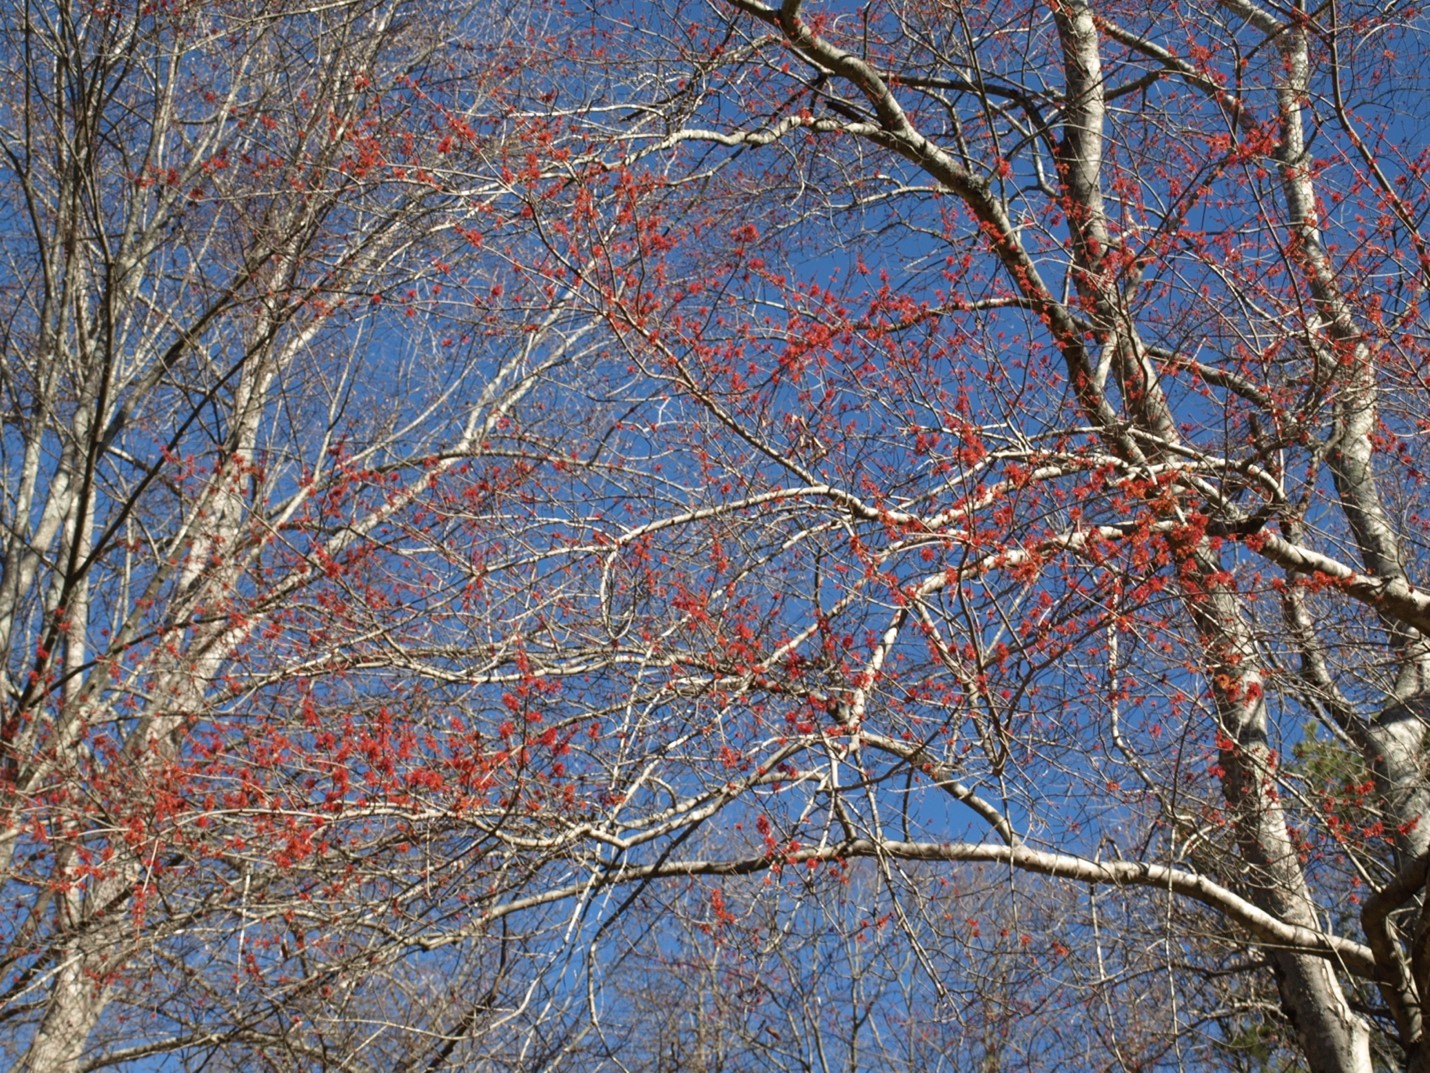 red maple tree flower